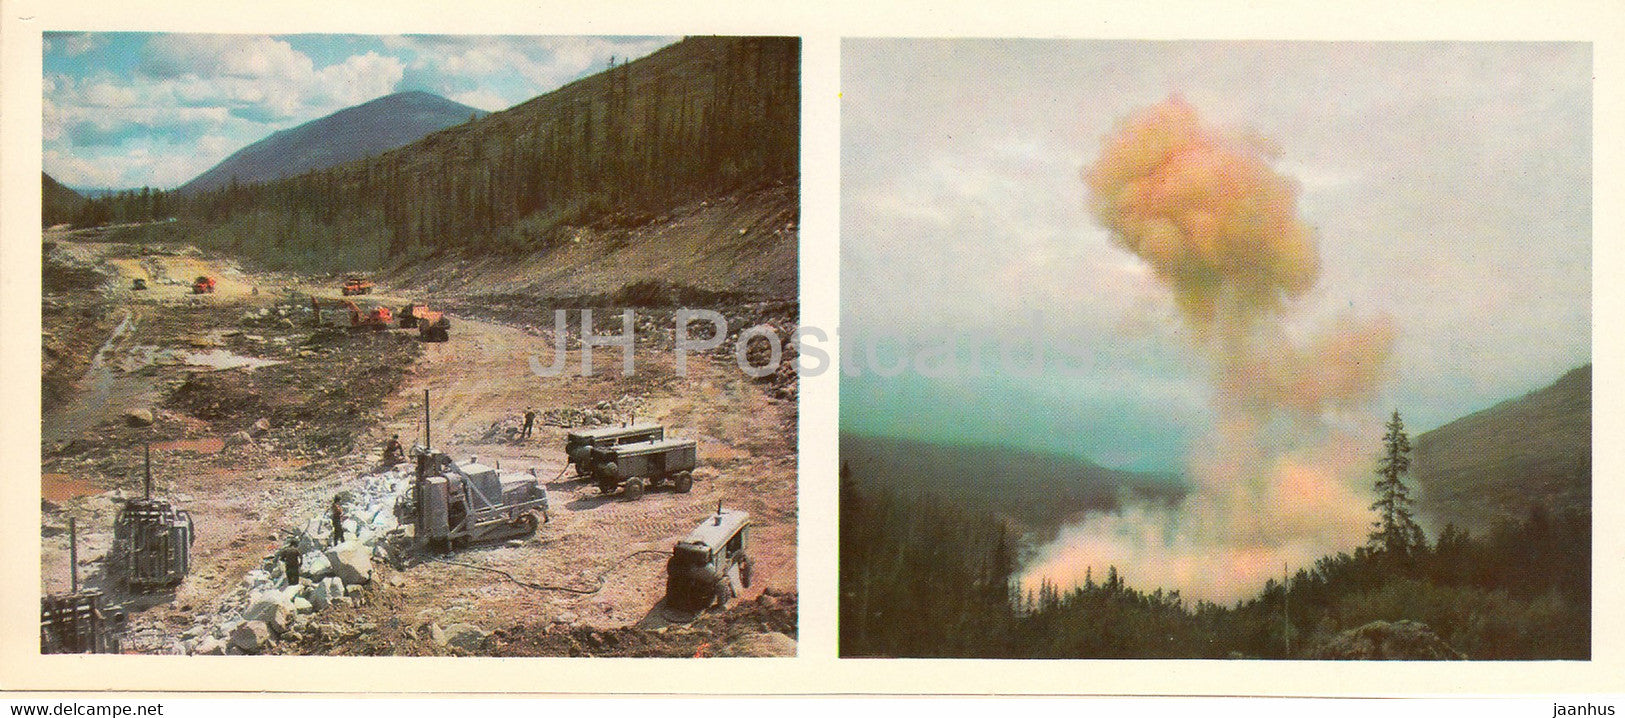 Davan pass - BAM - Baikal-Amur Mainline , construction of the railway - 1978 - Russia USSR - unused - JH Postcards